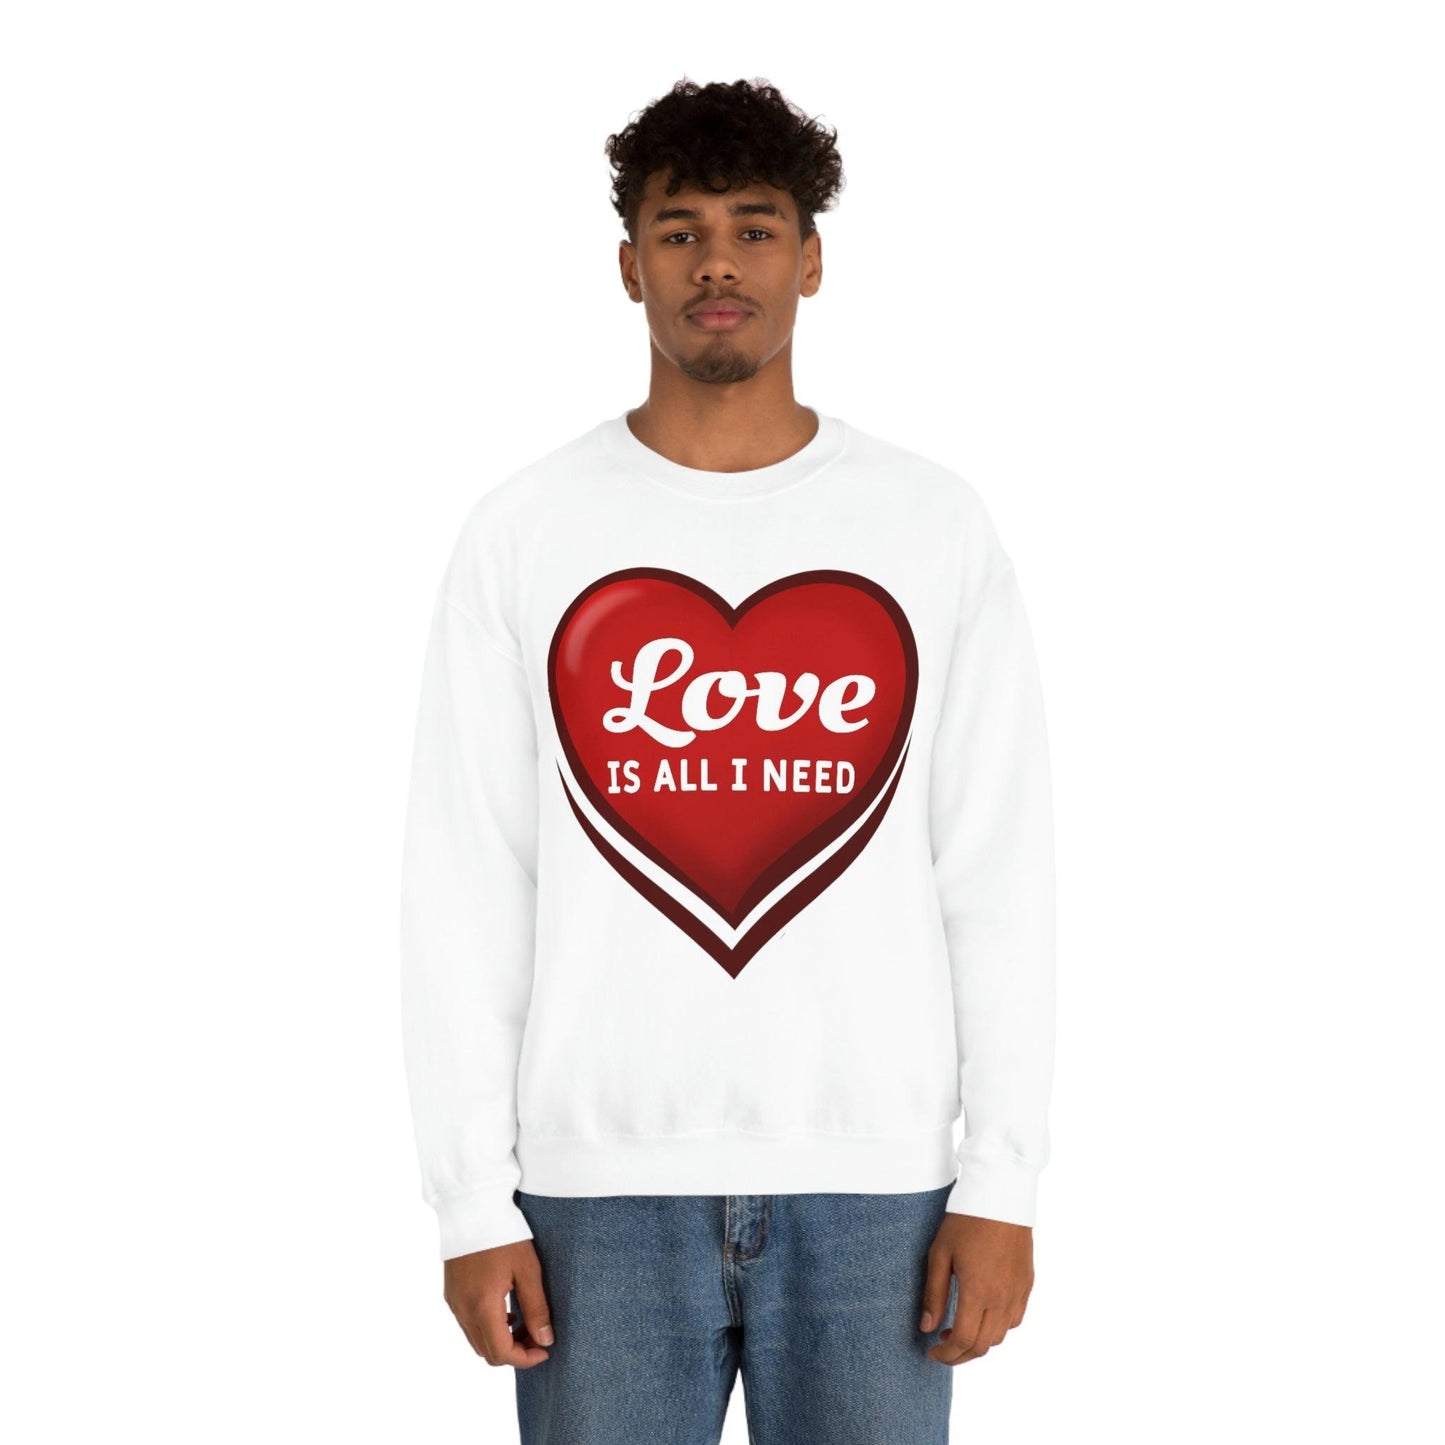 Love is all I need Sweatshirt, Valentine gift